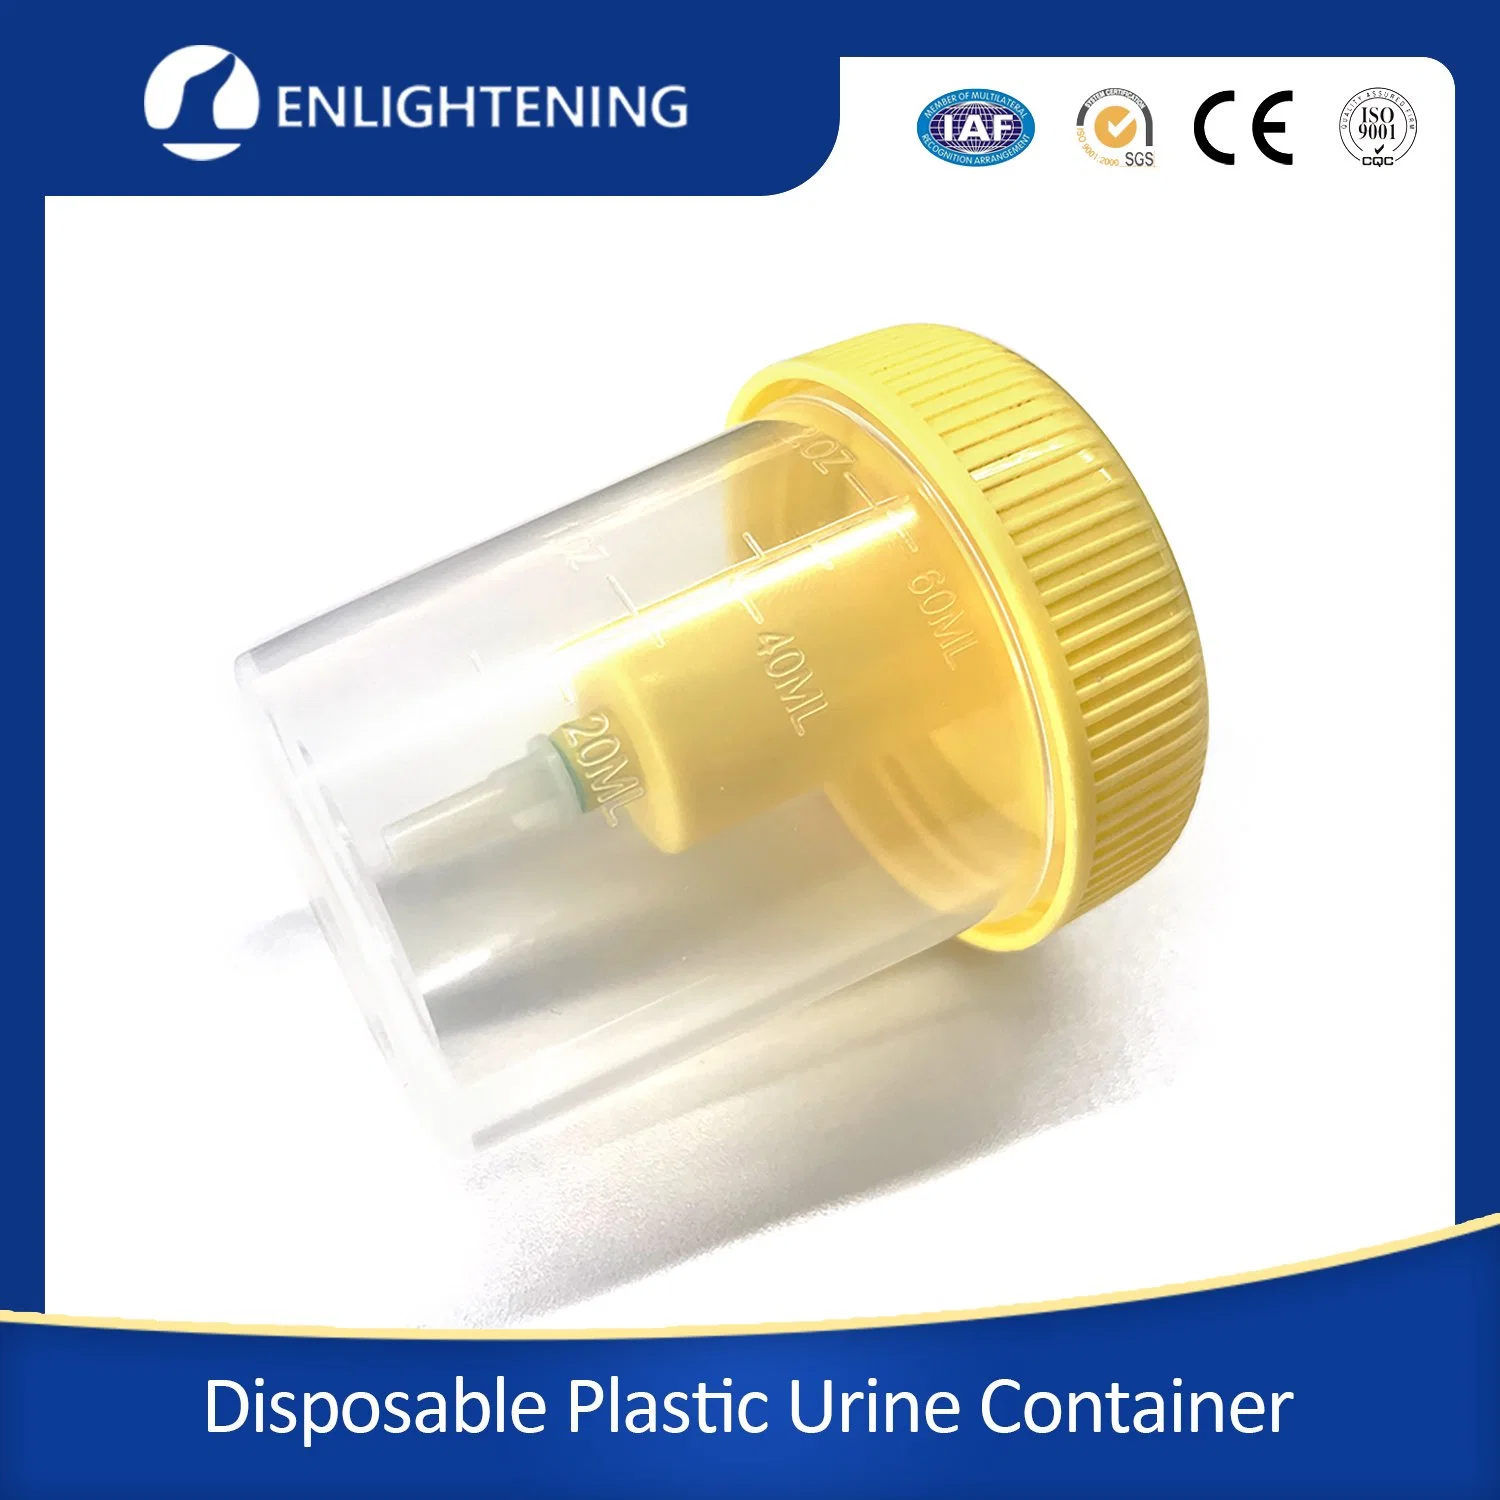 Qualidade elevada estéril de plástico descartáveis Teste Médica o copo de amostra de urina estéril contentor 30ml de contêineres de fezes